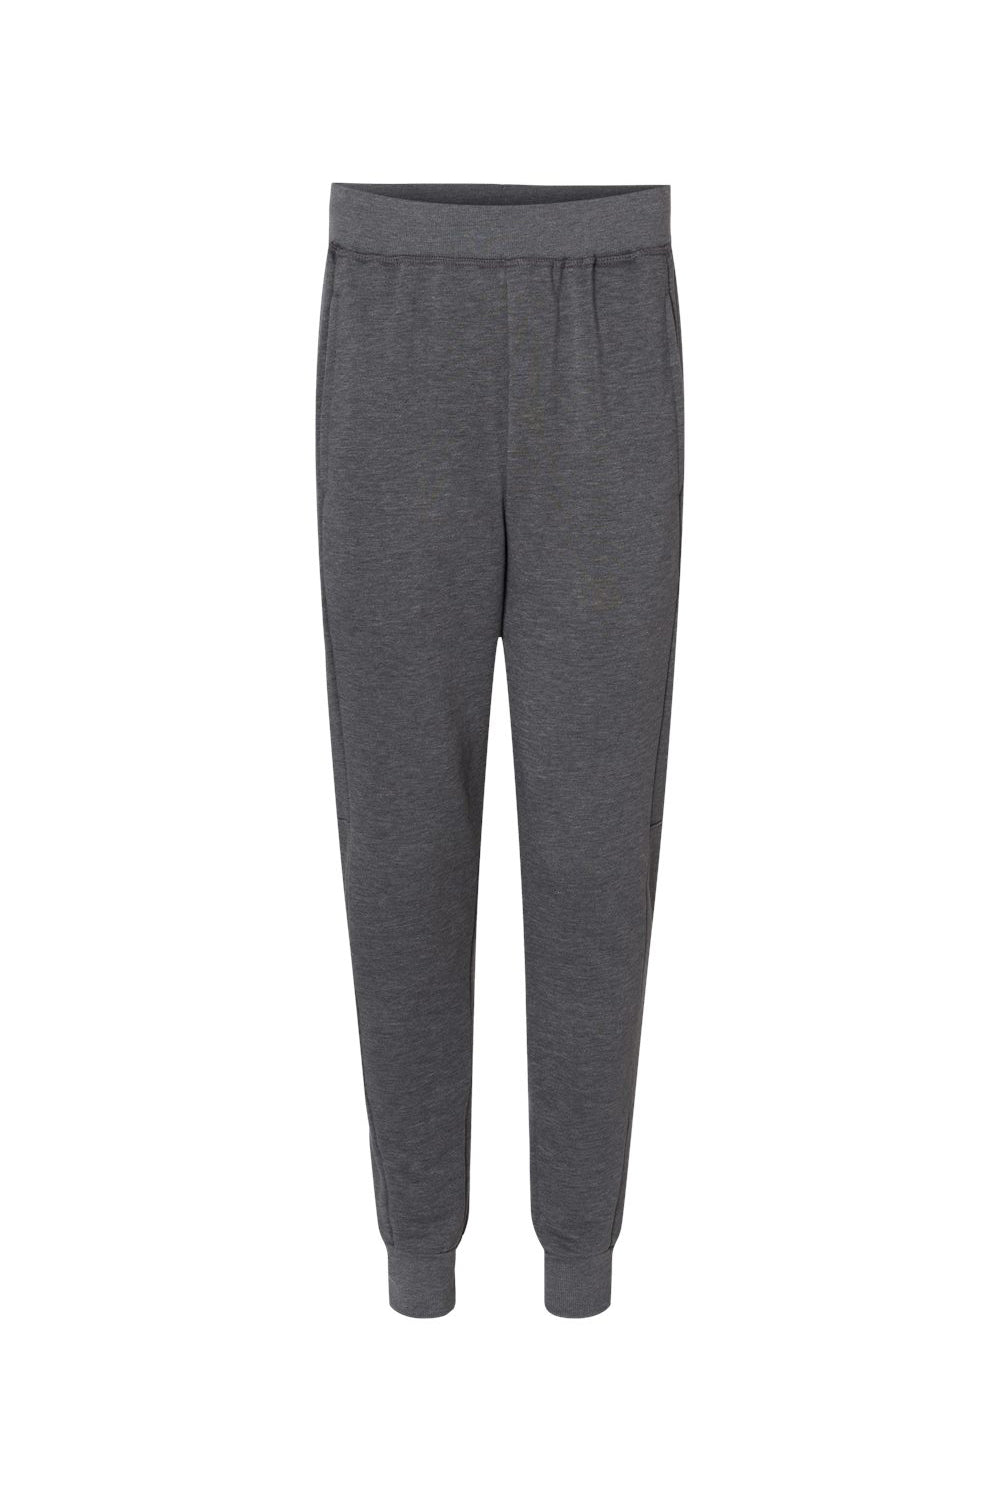 Augusta Sportswear 6868 Mens Eco Revive 3 Season Fleece Jogger Sweatpants w/ Pockets Heather Carbon Grey Flat Front